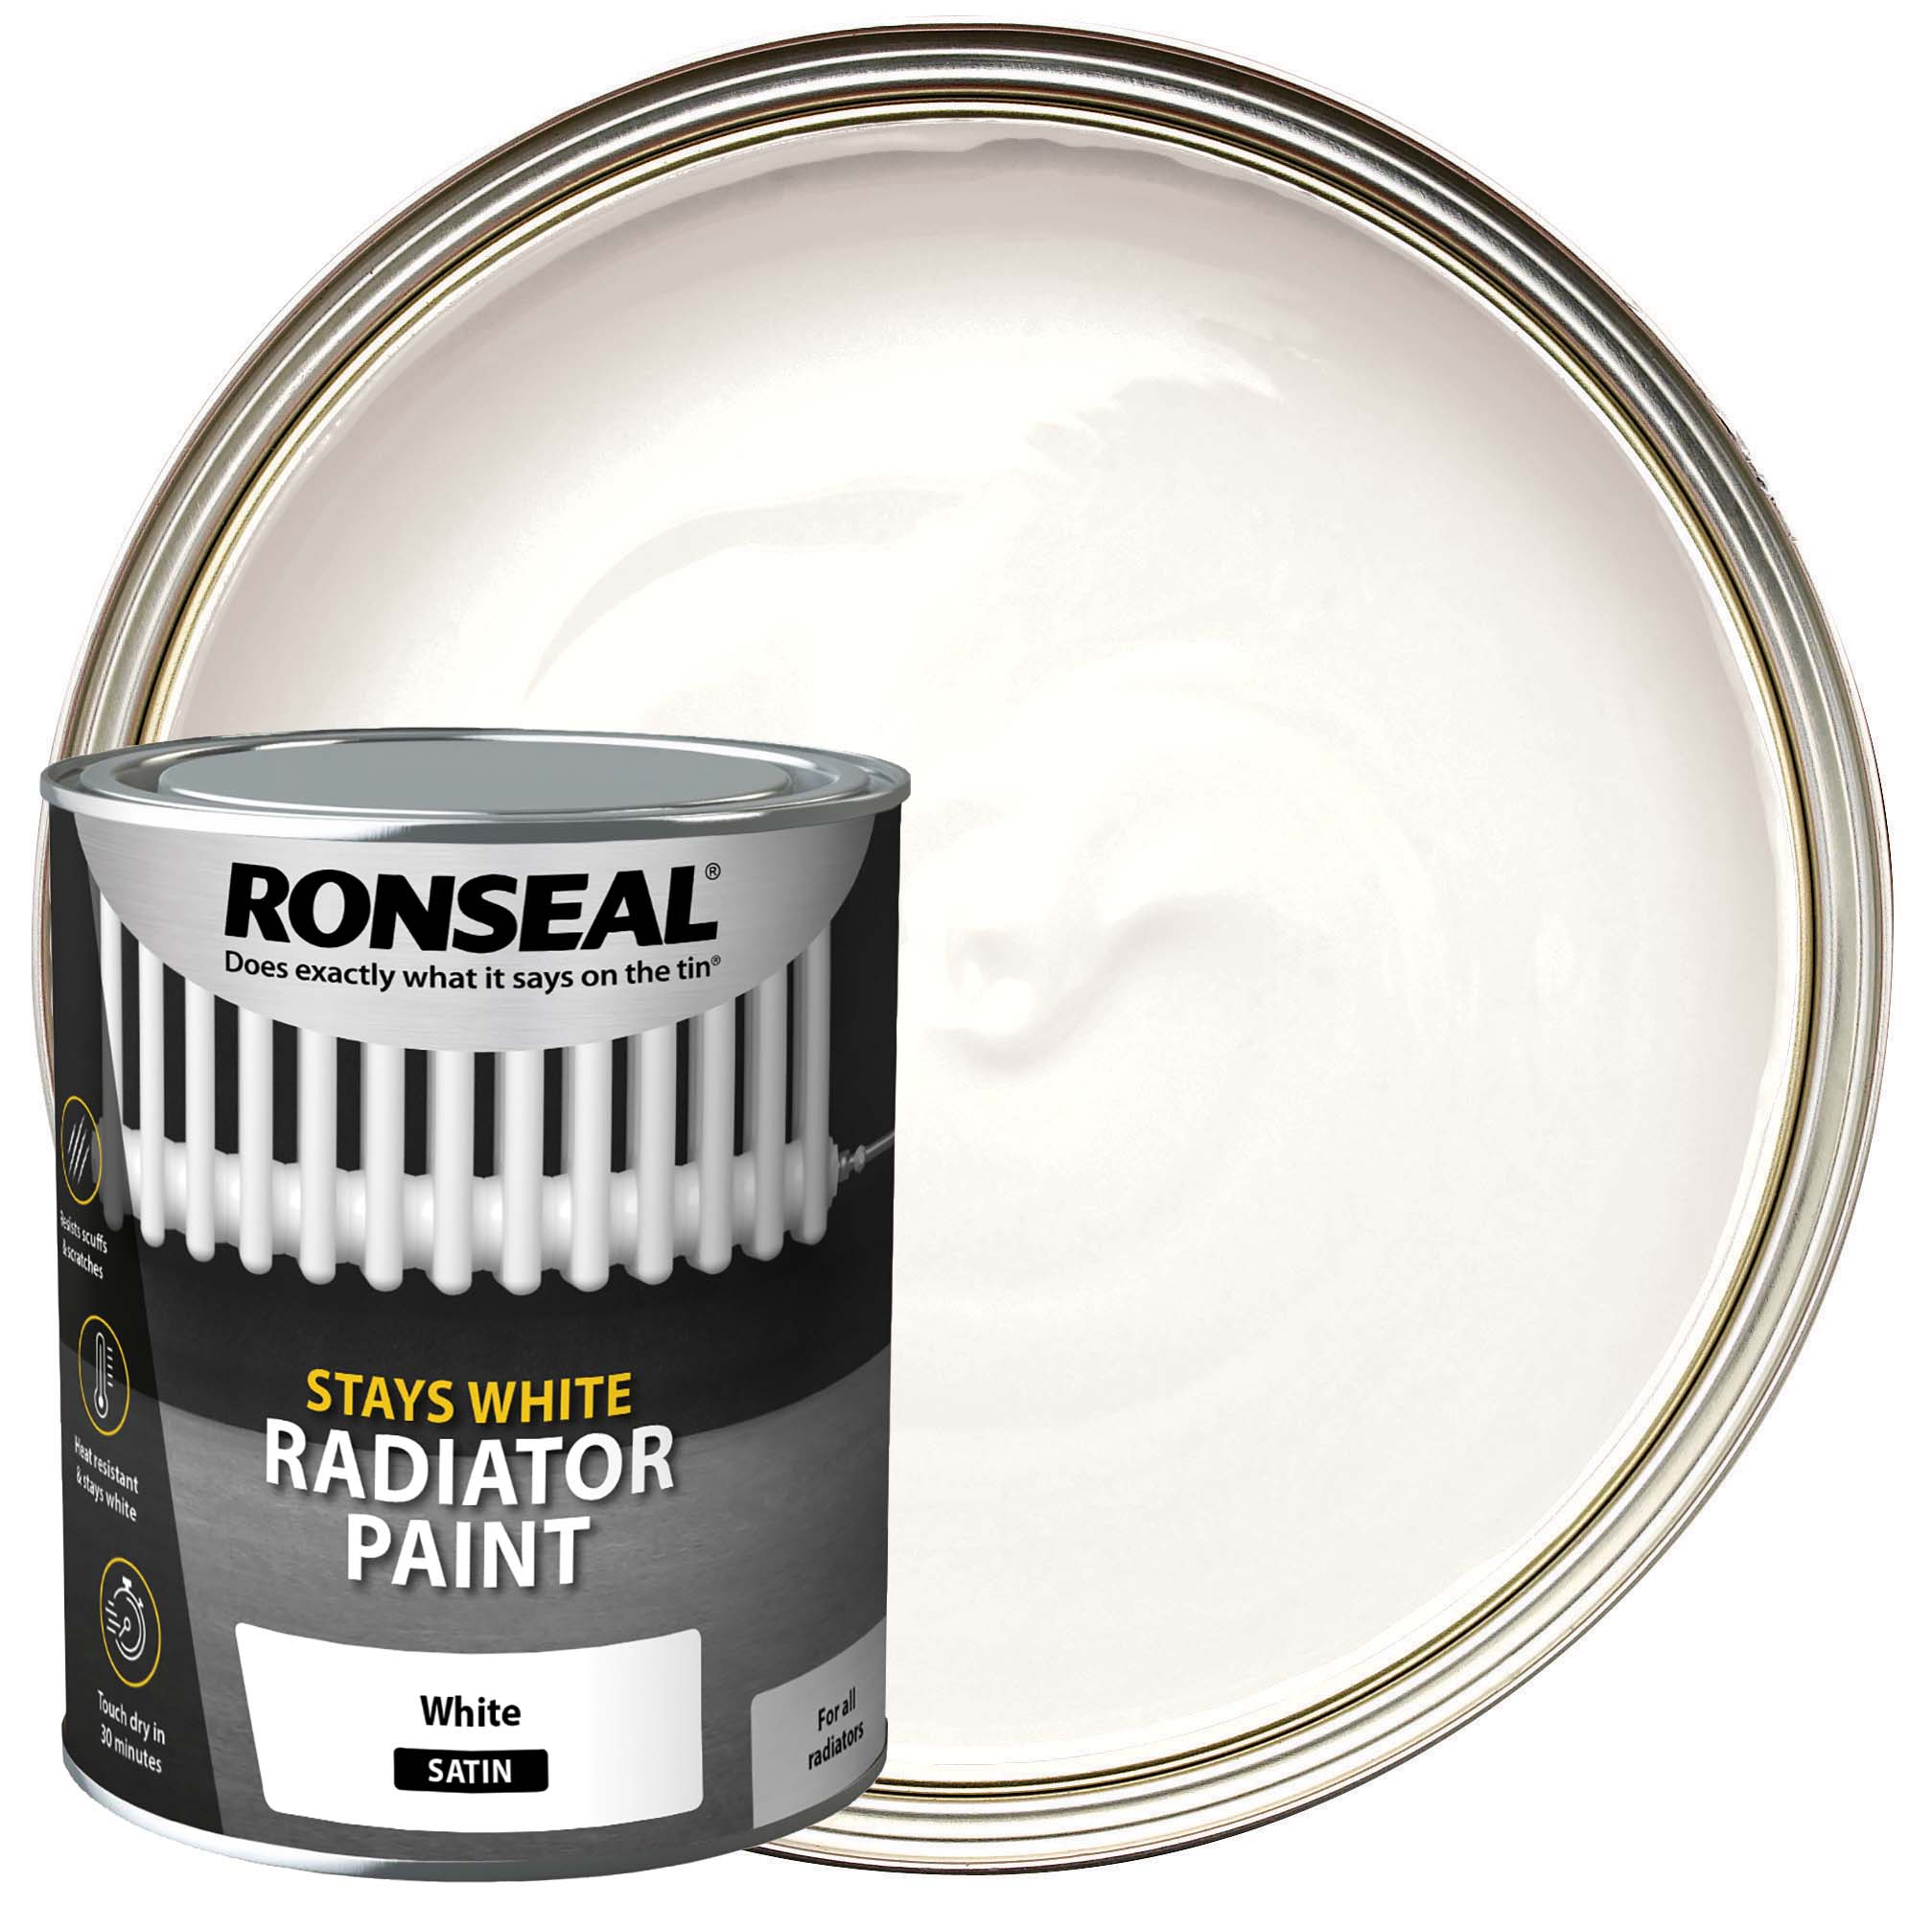 Image of Ronseal Stays White Radiator Paint White Satin 750ml